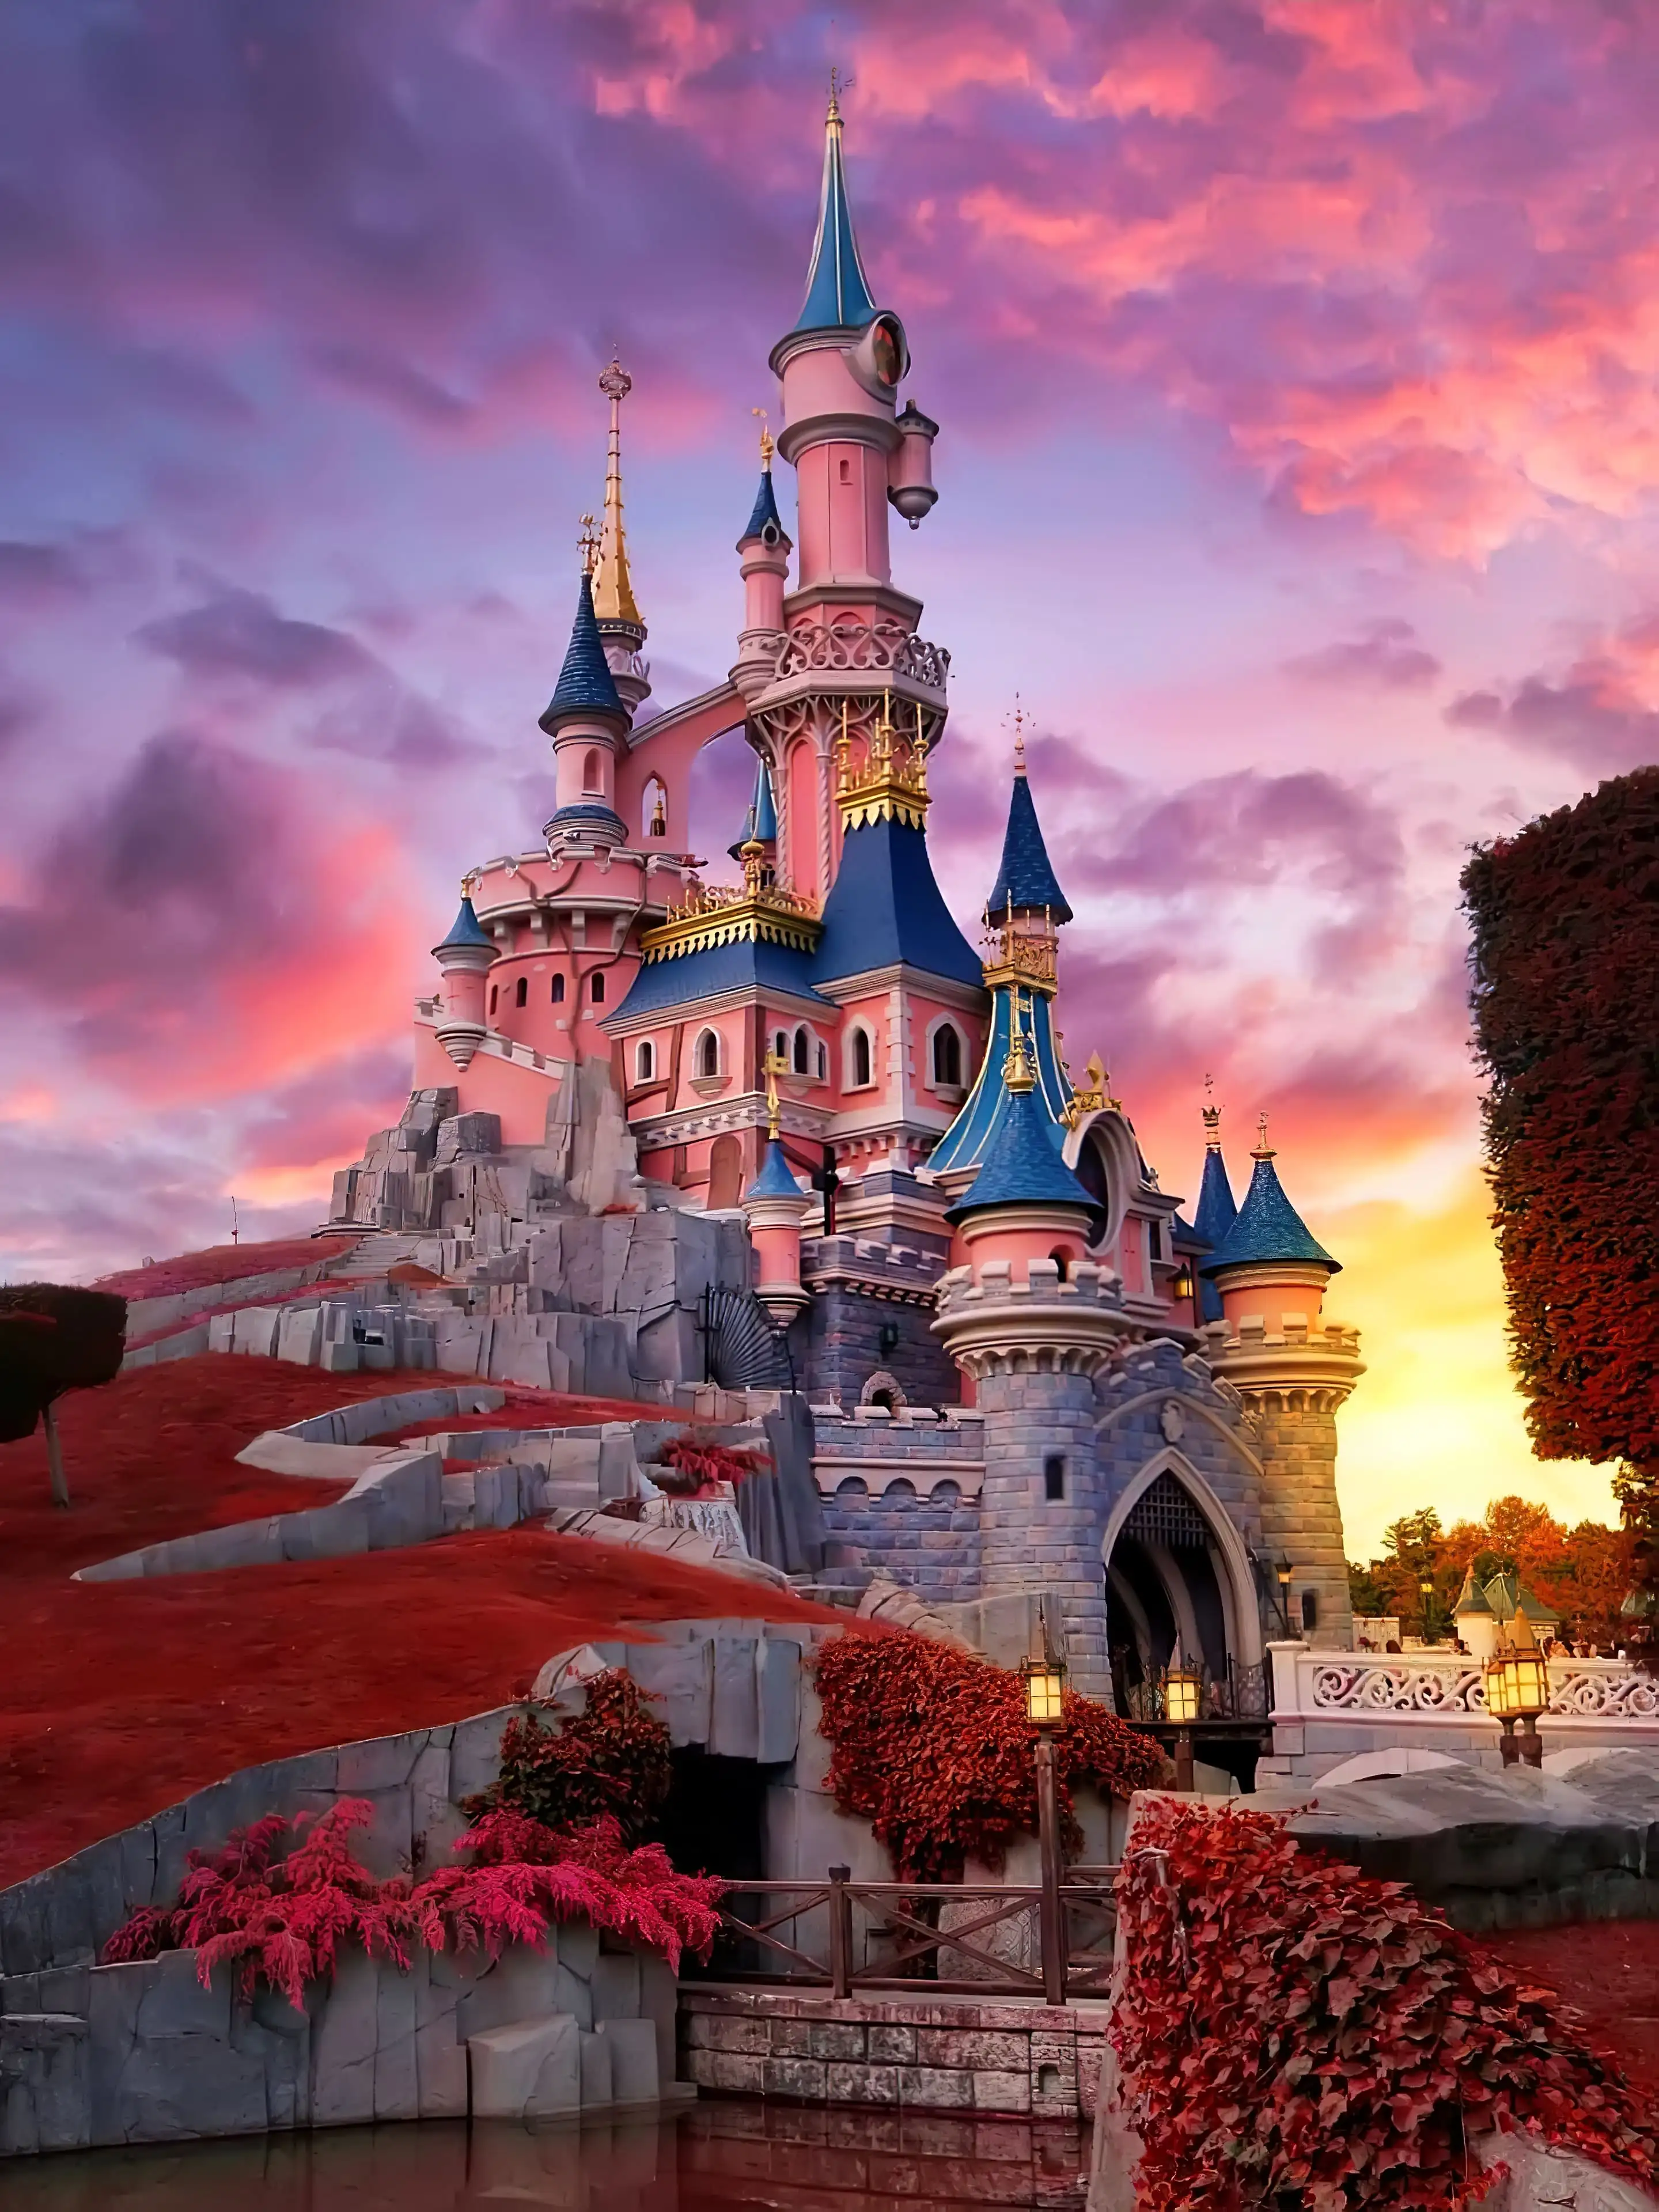 Fond D Ecran De Chateau De Disneyland Paris Wallery